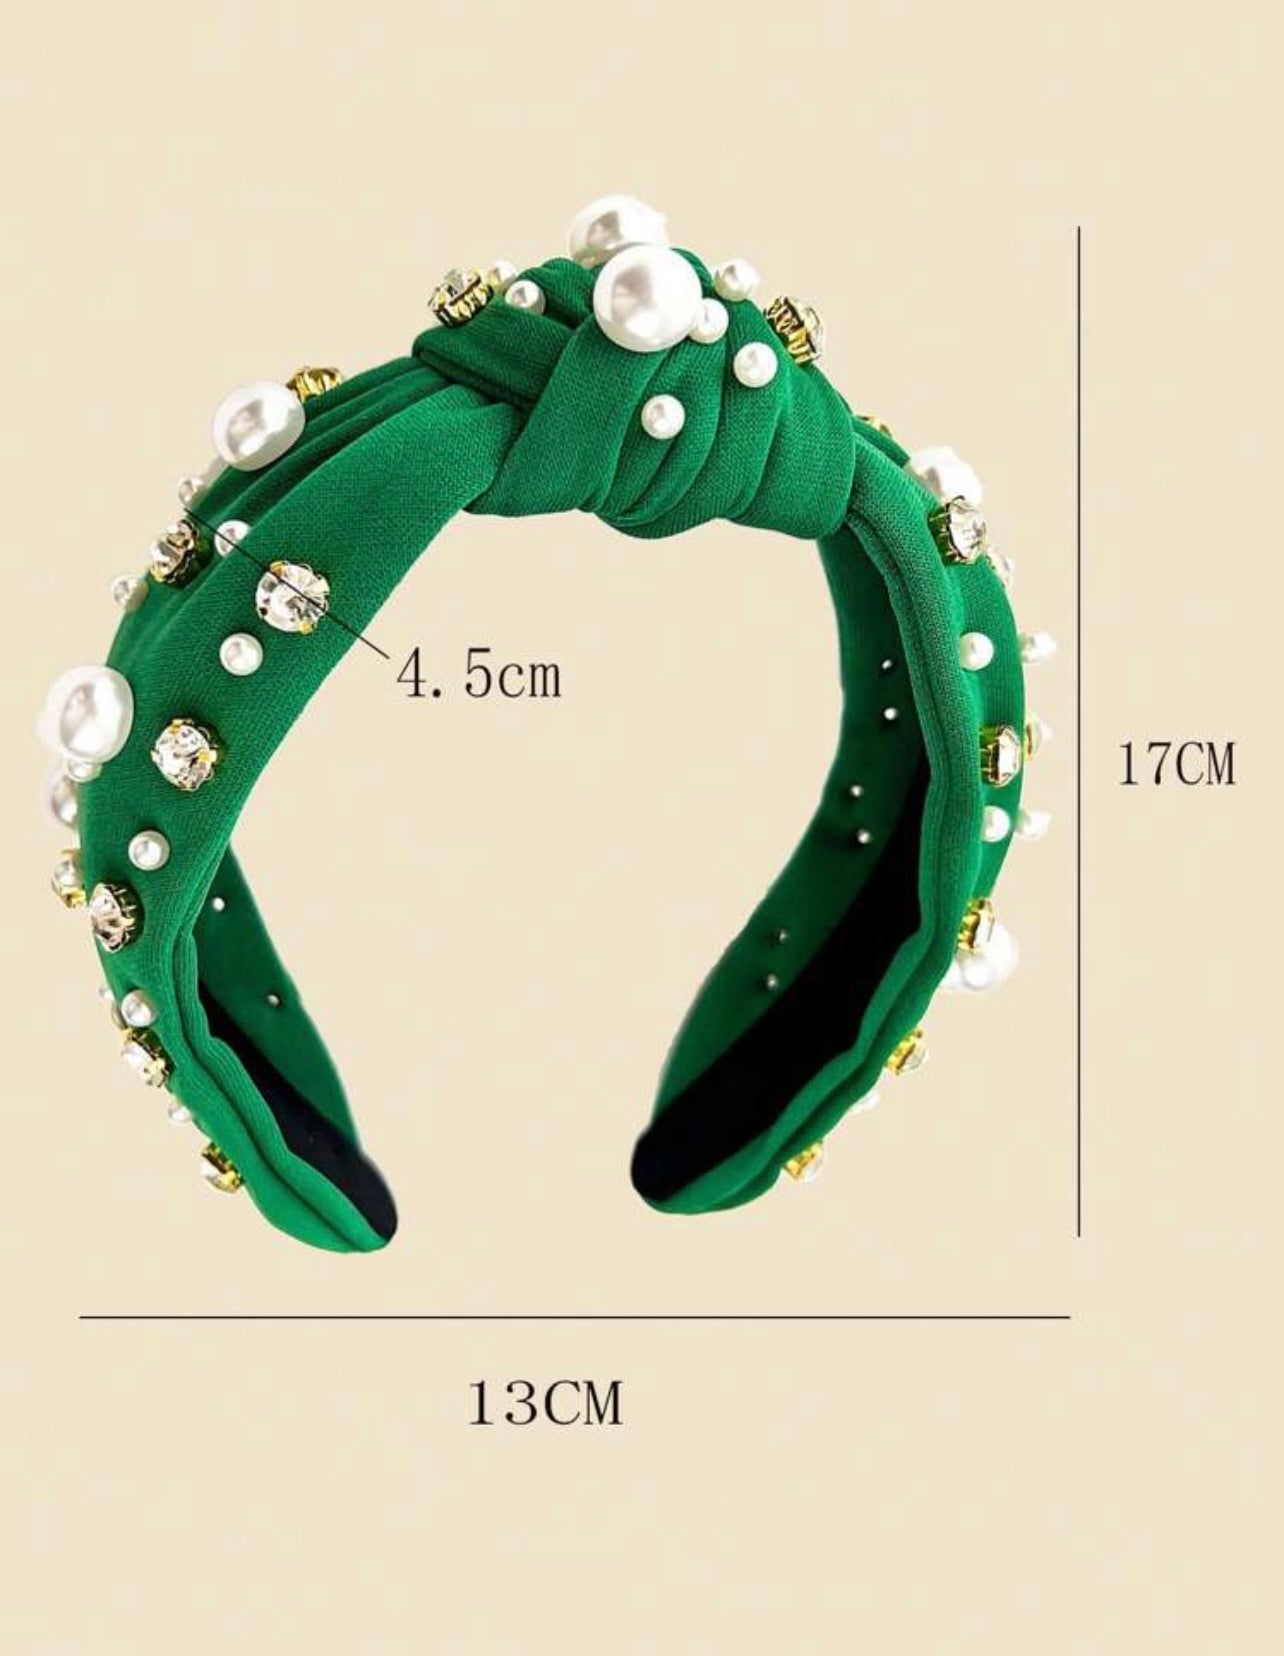 Beautiful Green and Pearl Headband